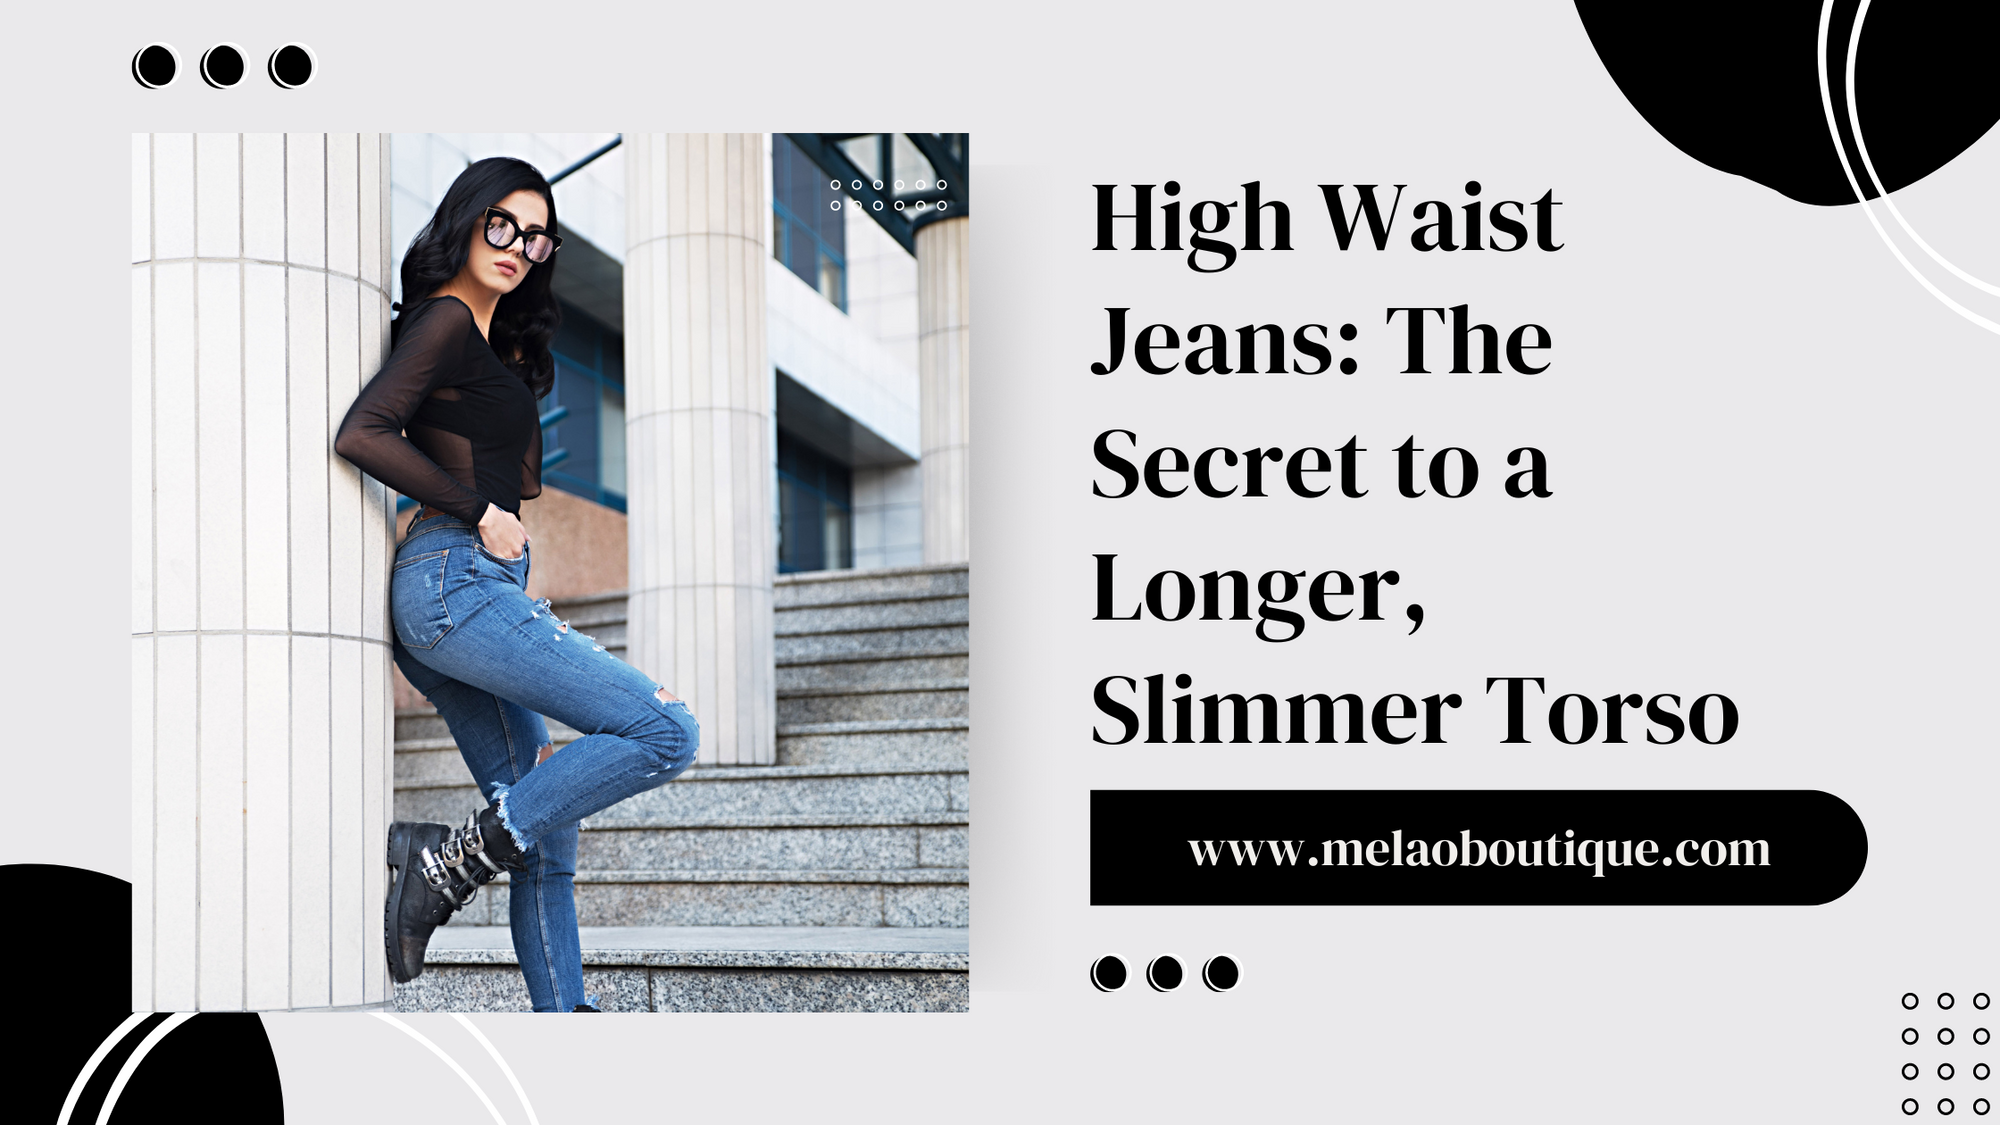 High Waist Jeans: The Secret to a Longer, Slimmer Torso